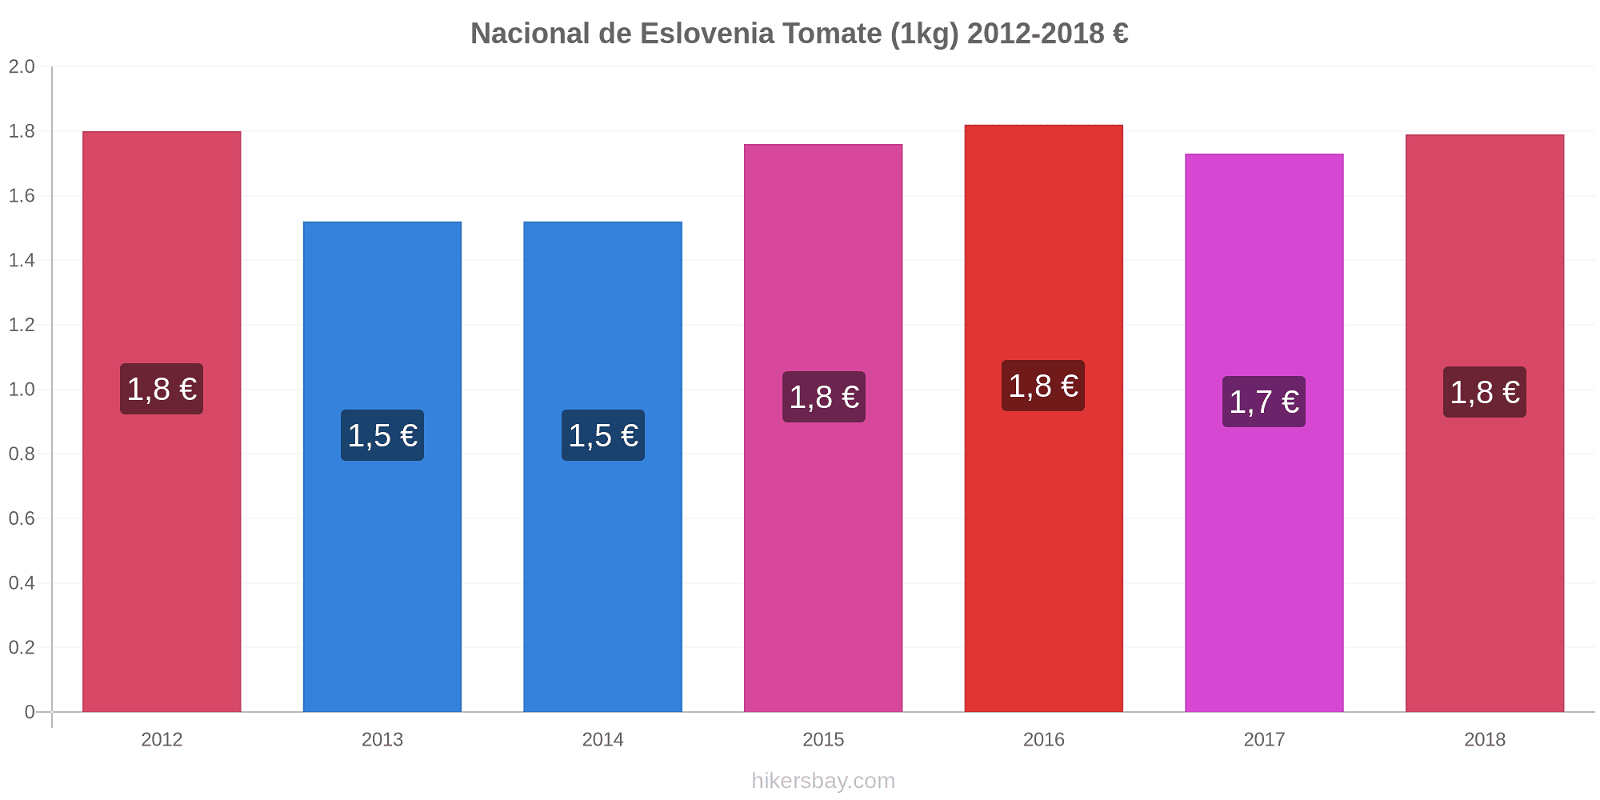 Nacional de Eslovenia cambios de precios Tomate (1kg) hikersbay.com